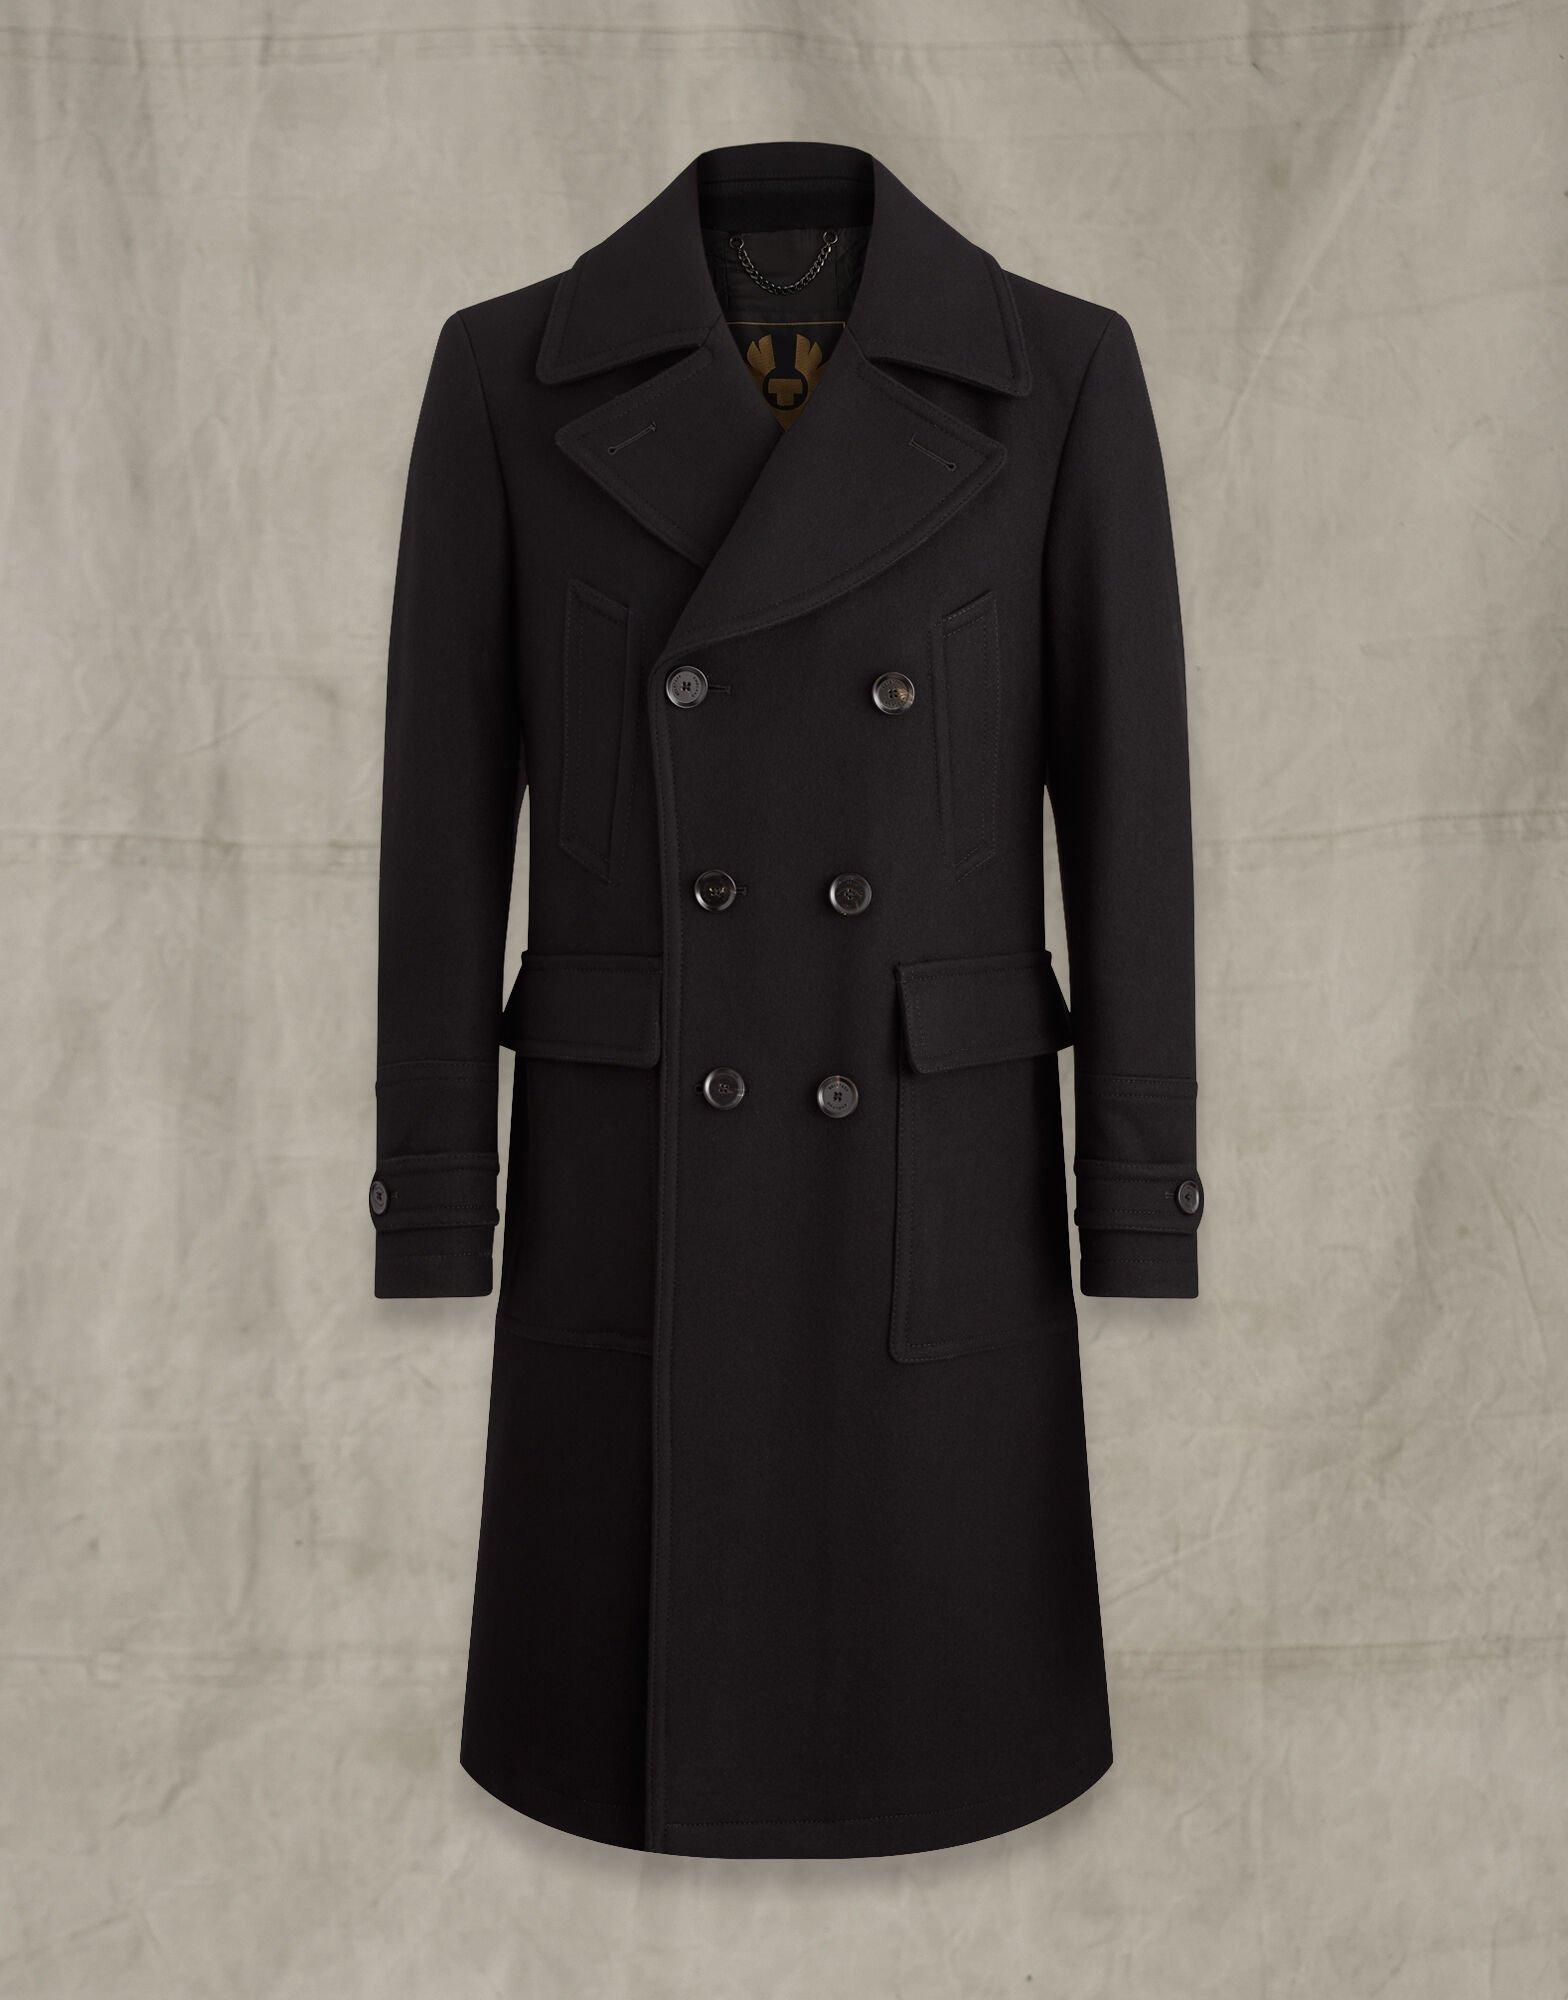 Belstaff Wool Milford Coat in Black for Men - Lyst